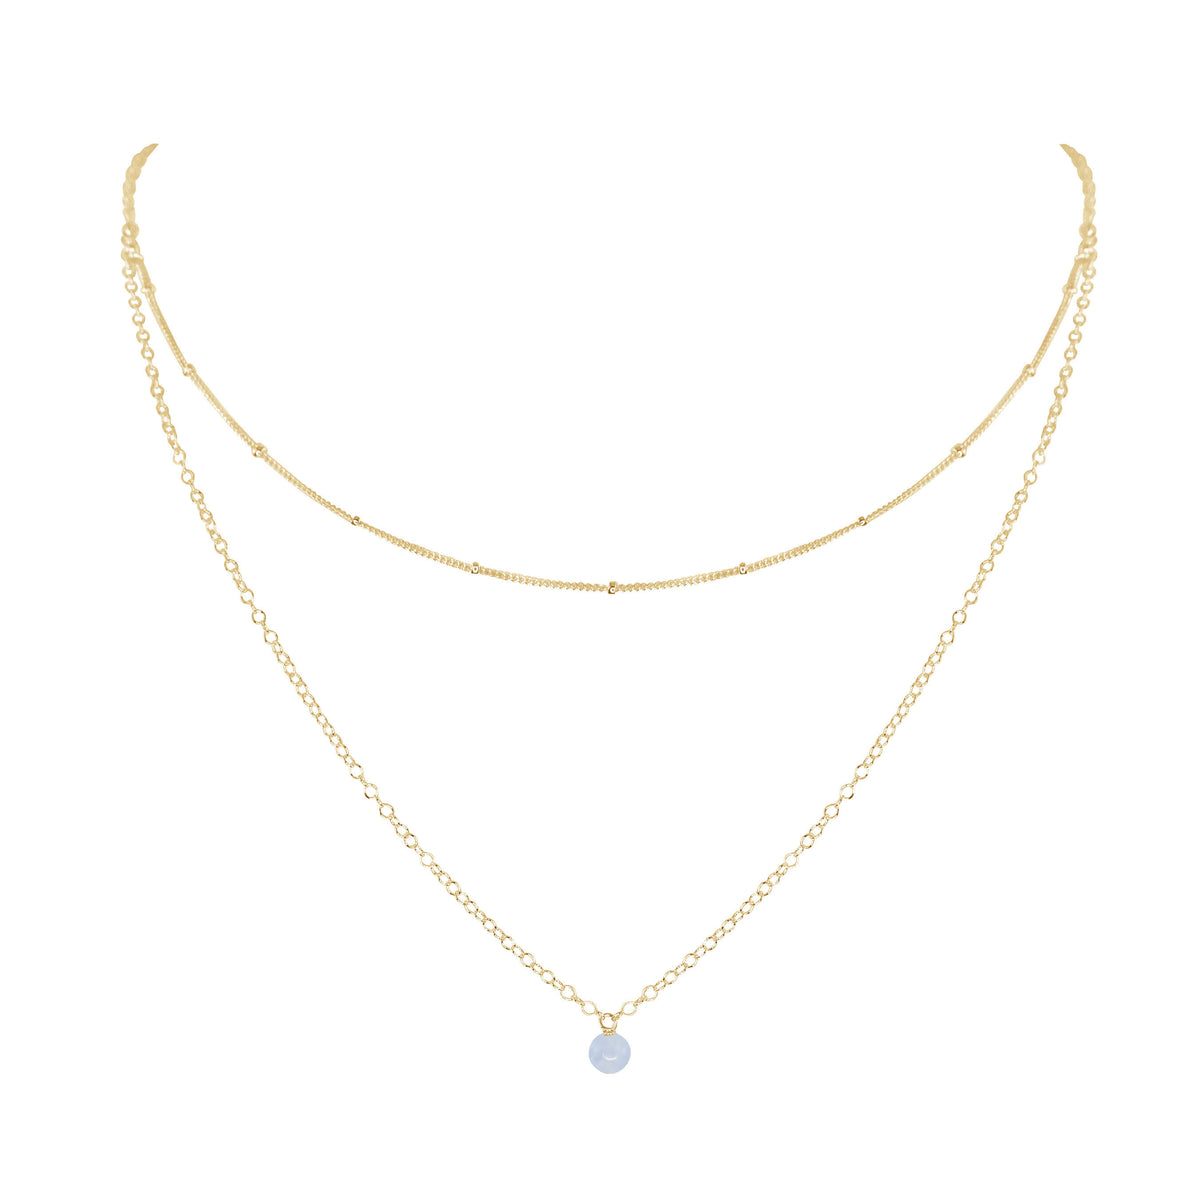 Layered Choker - Blue Lace Agate - 14K Gold Fill - Luna Tide Handmade Jewellery